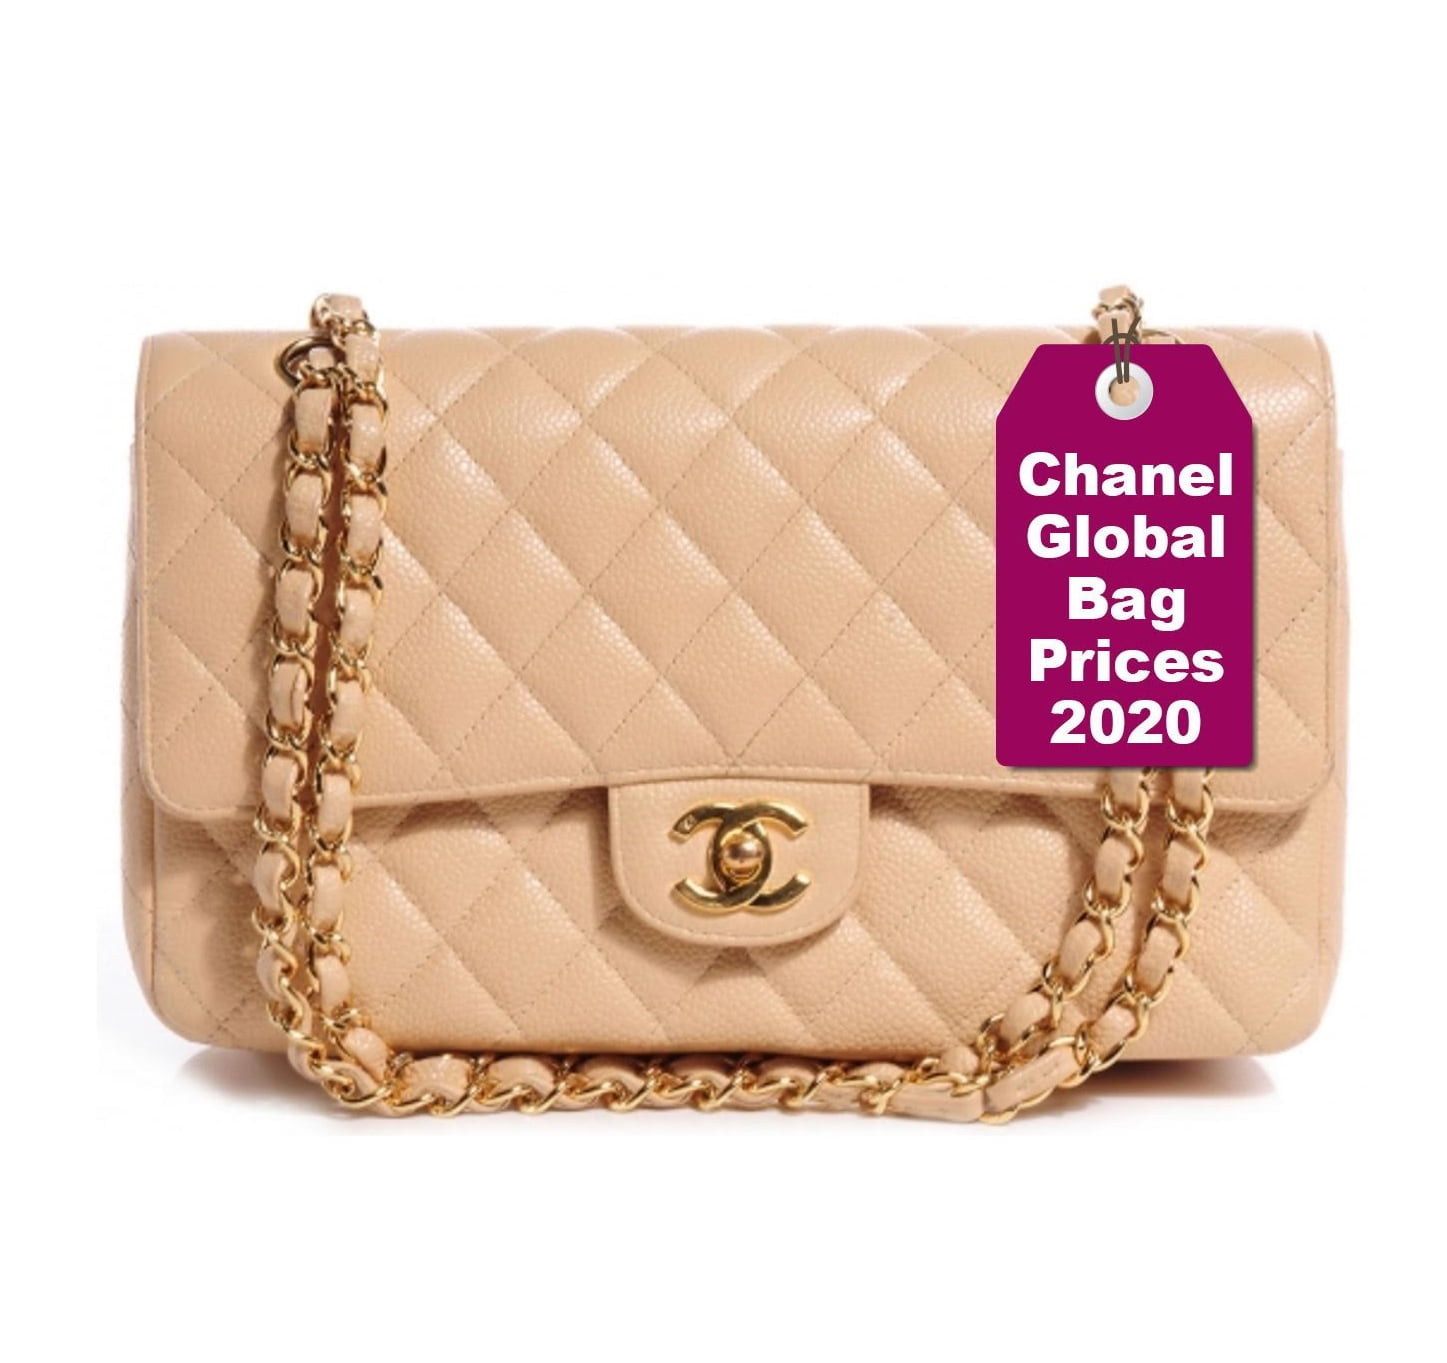 Chanel Purse Pricing